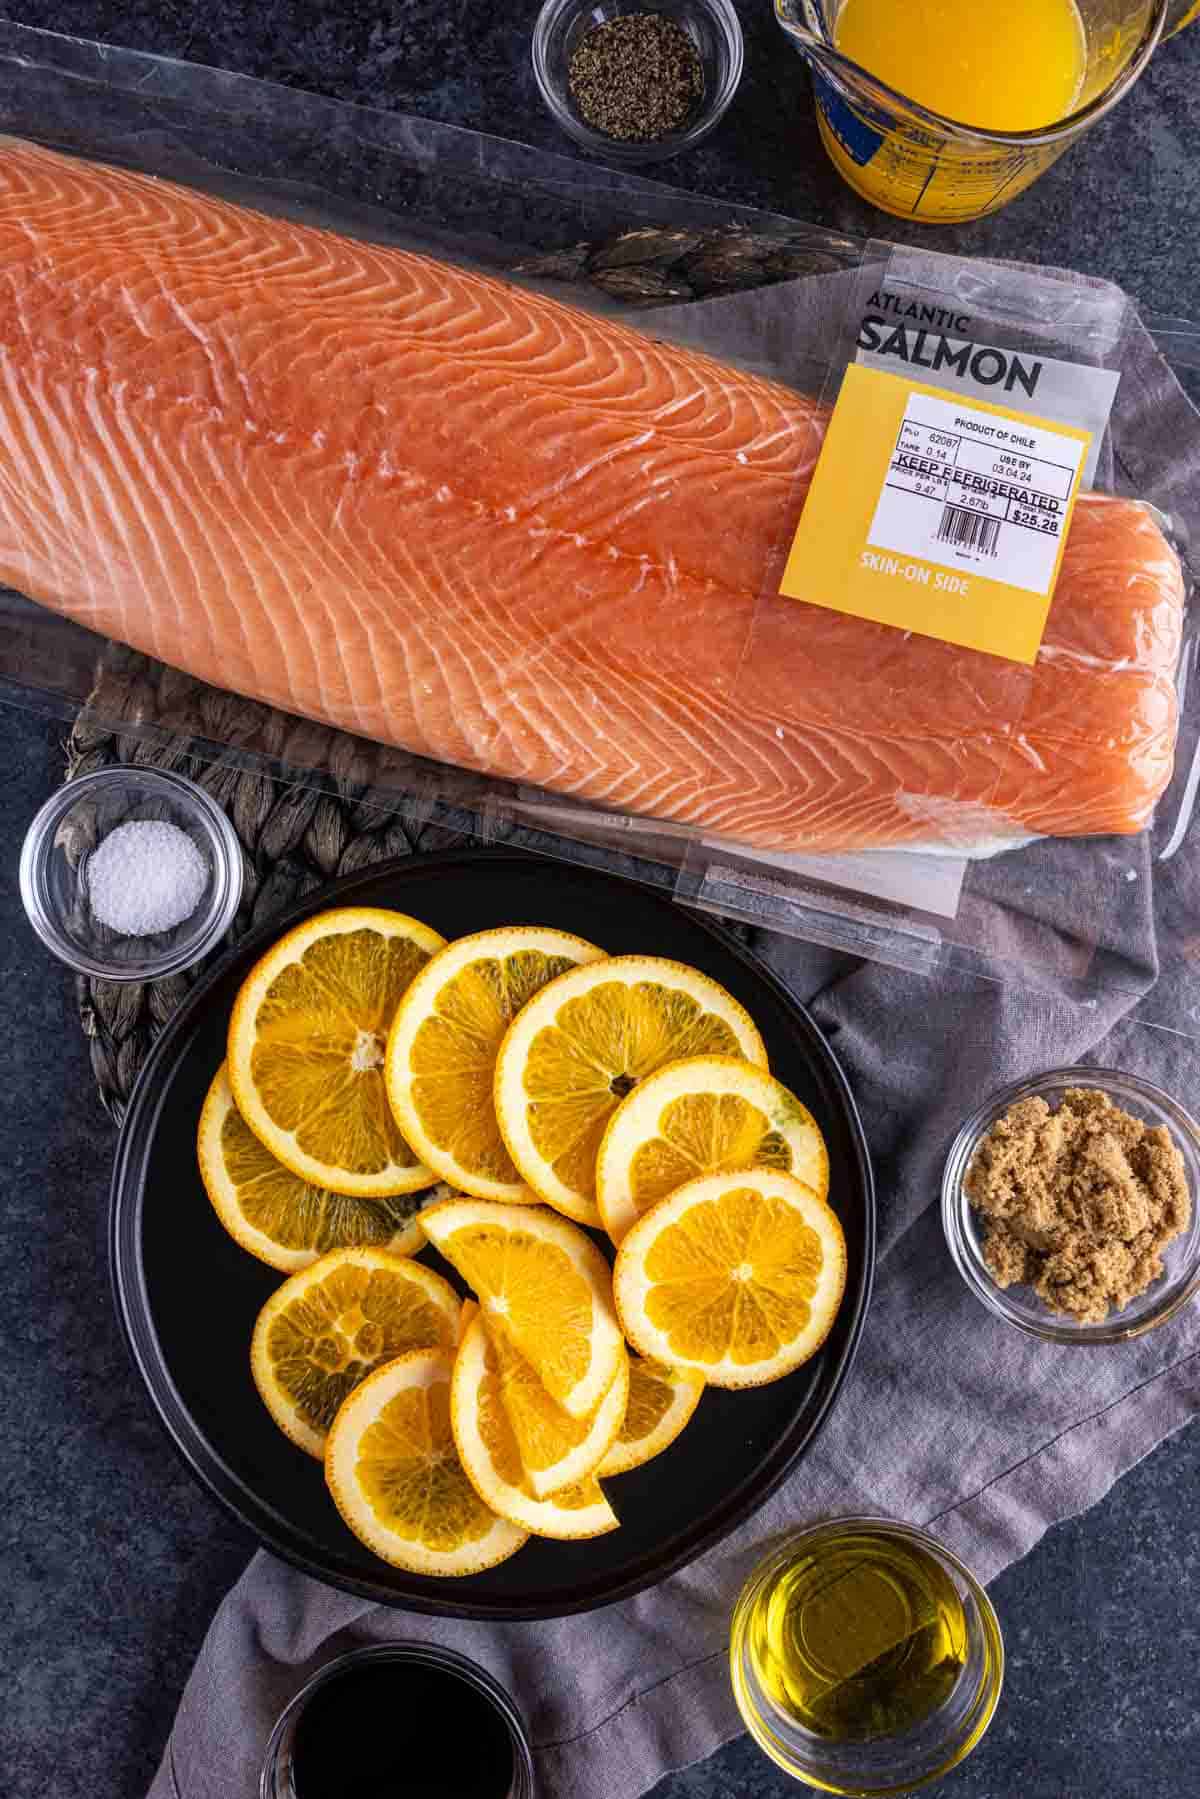 Fresh salmon fillet with orange slices and seasoning ingredients to make Orange Glazed Salmon